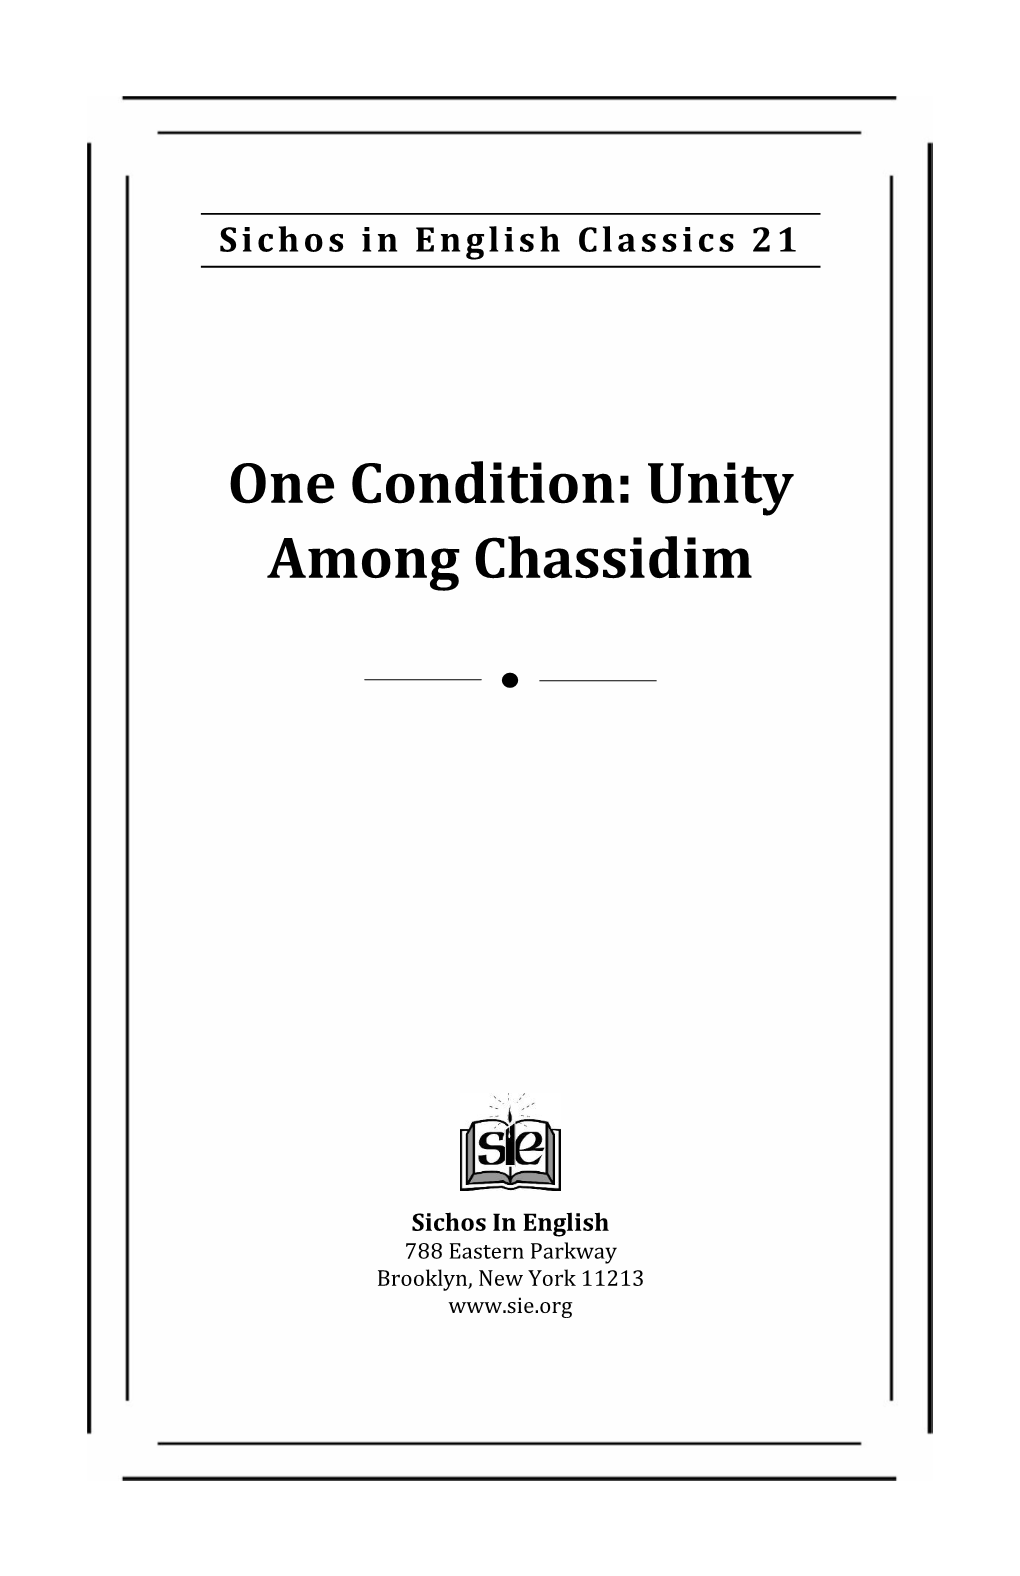 One Condition: Unity Among Chassidim